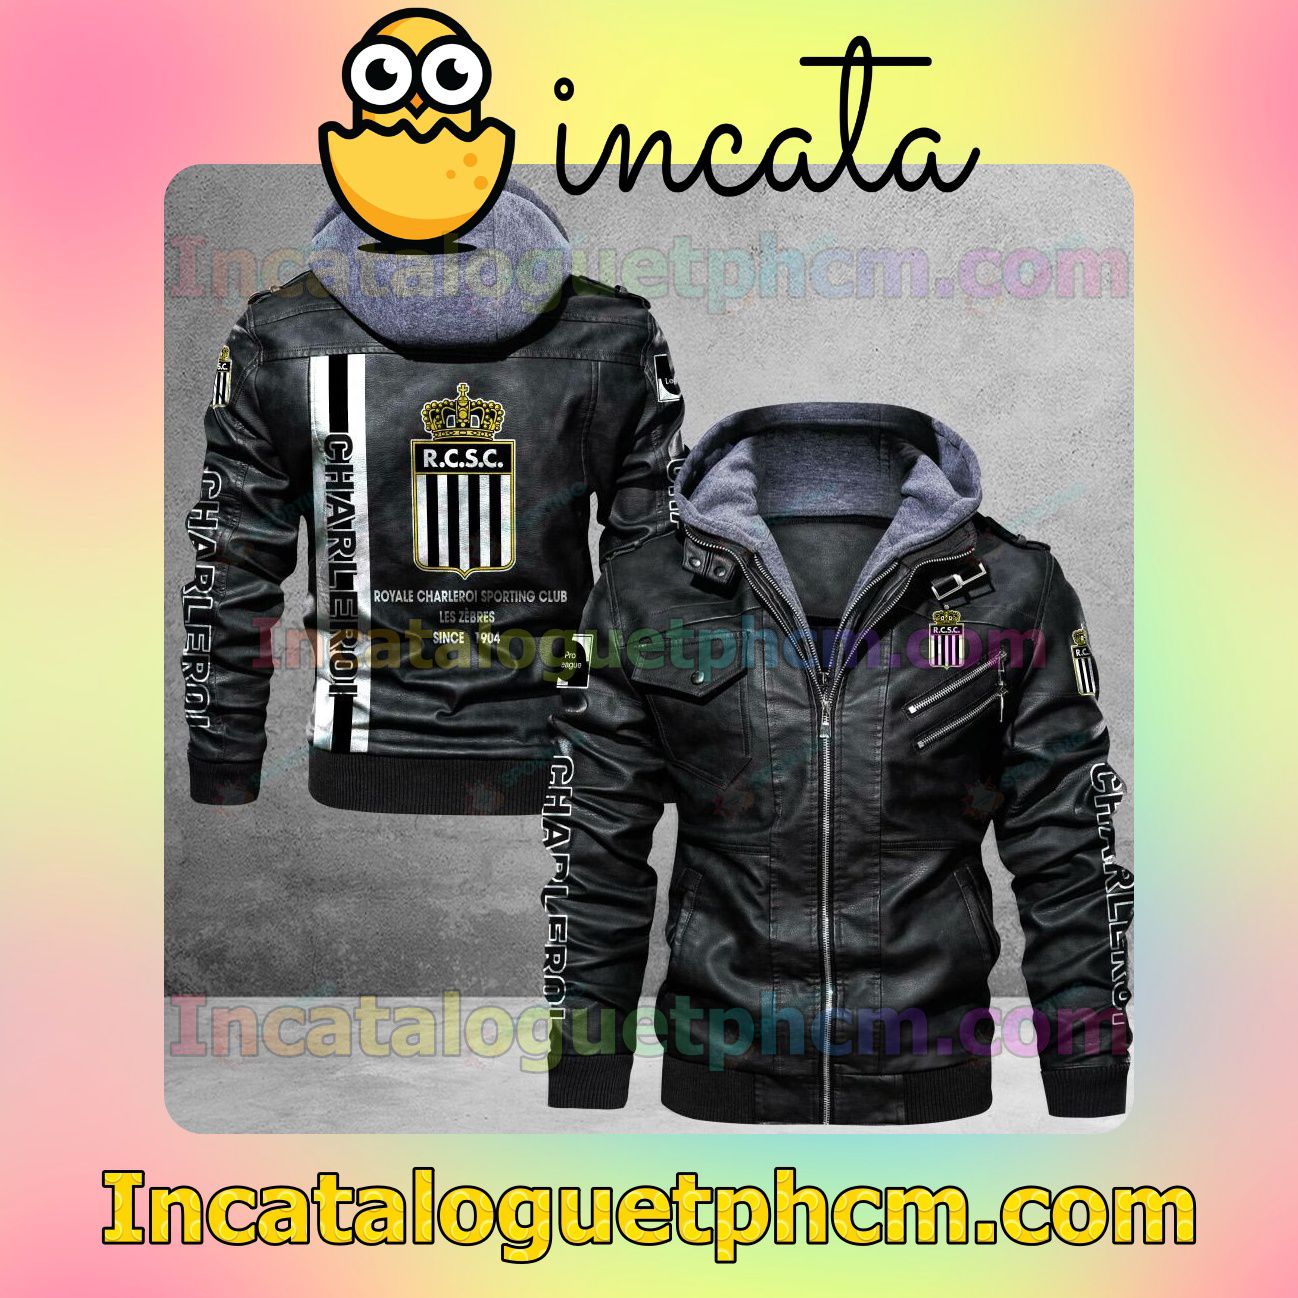 Cheap R. Charleroi S.C Brand Uniform Leather Jacket